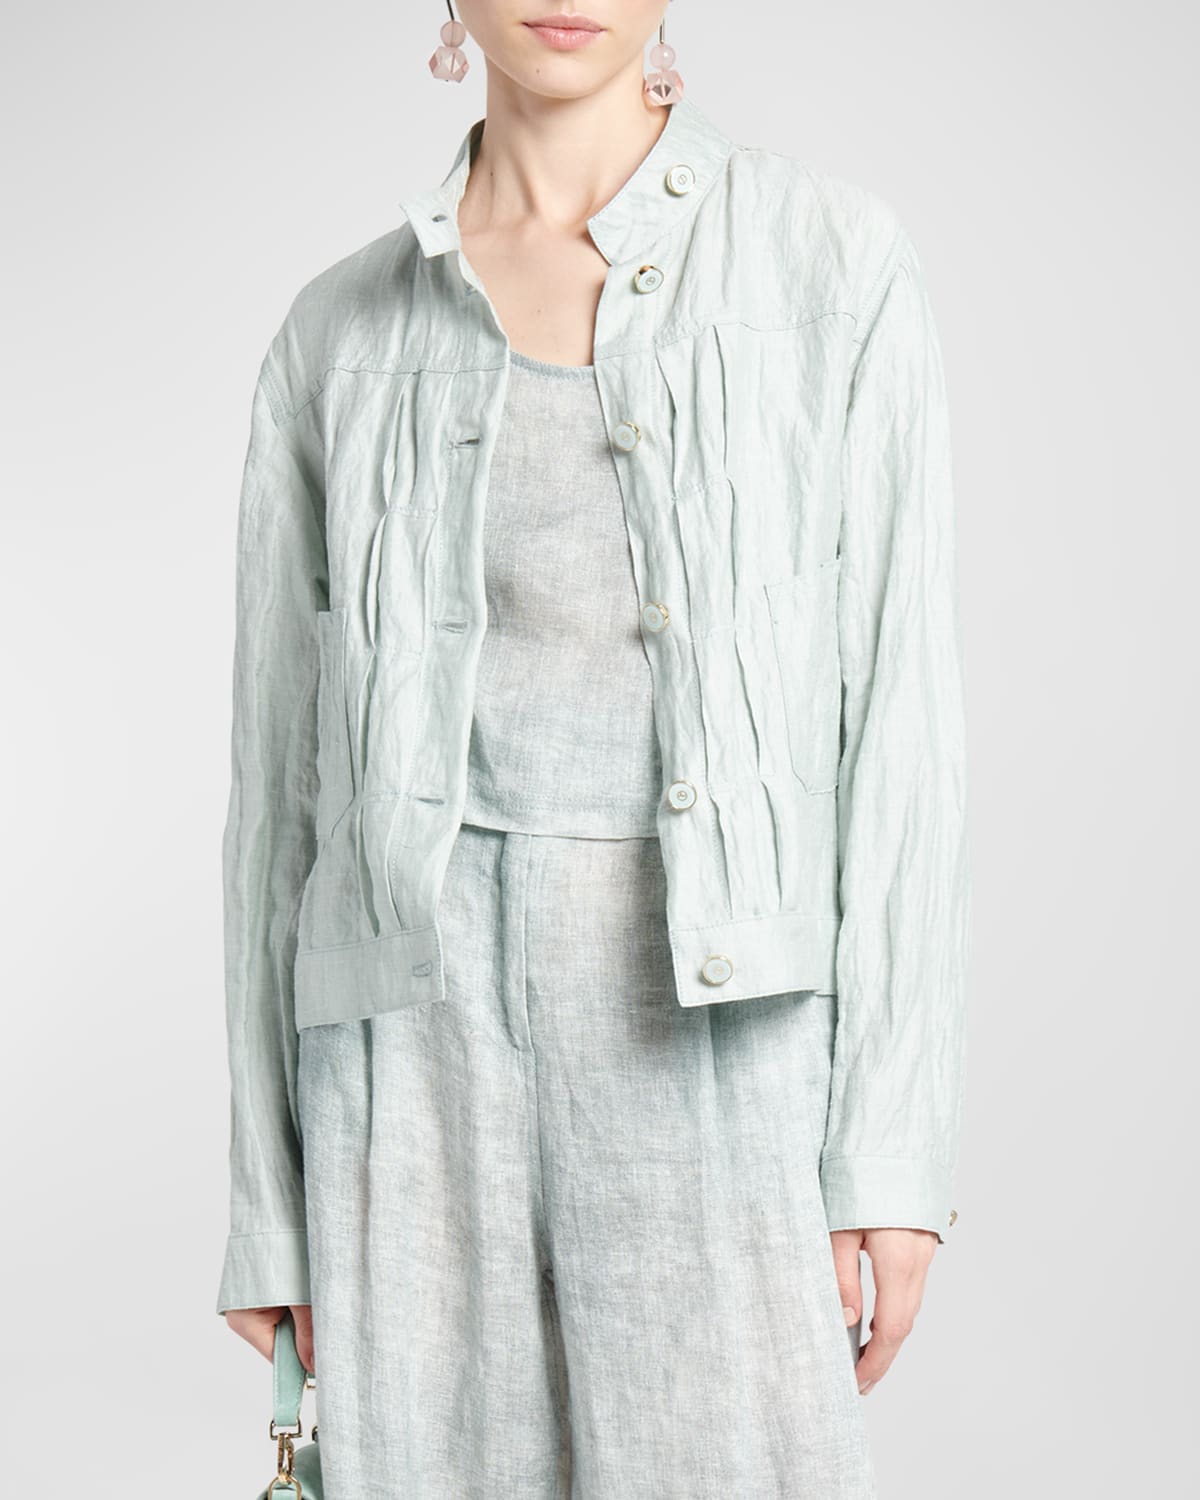 Giorgio Armani Women's Textured Cotton & Linen Jacket In Seafoam